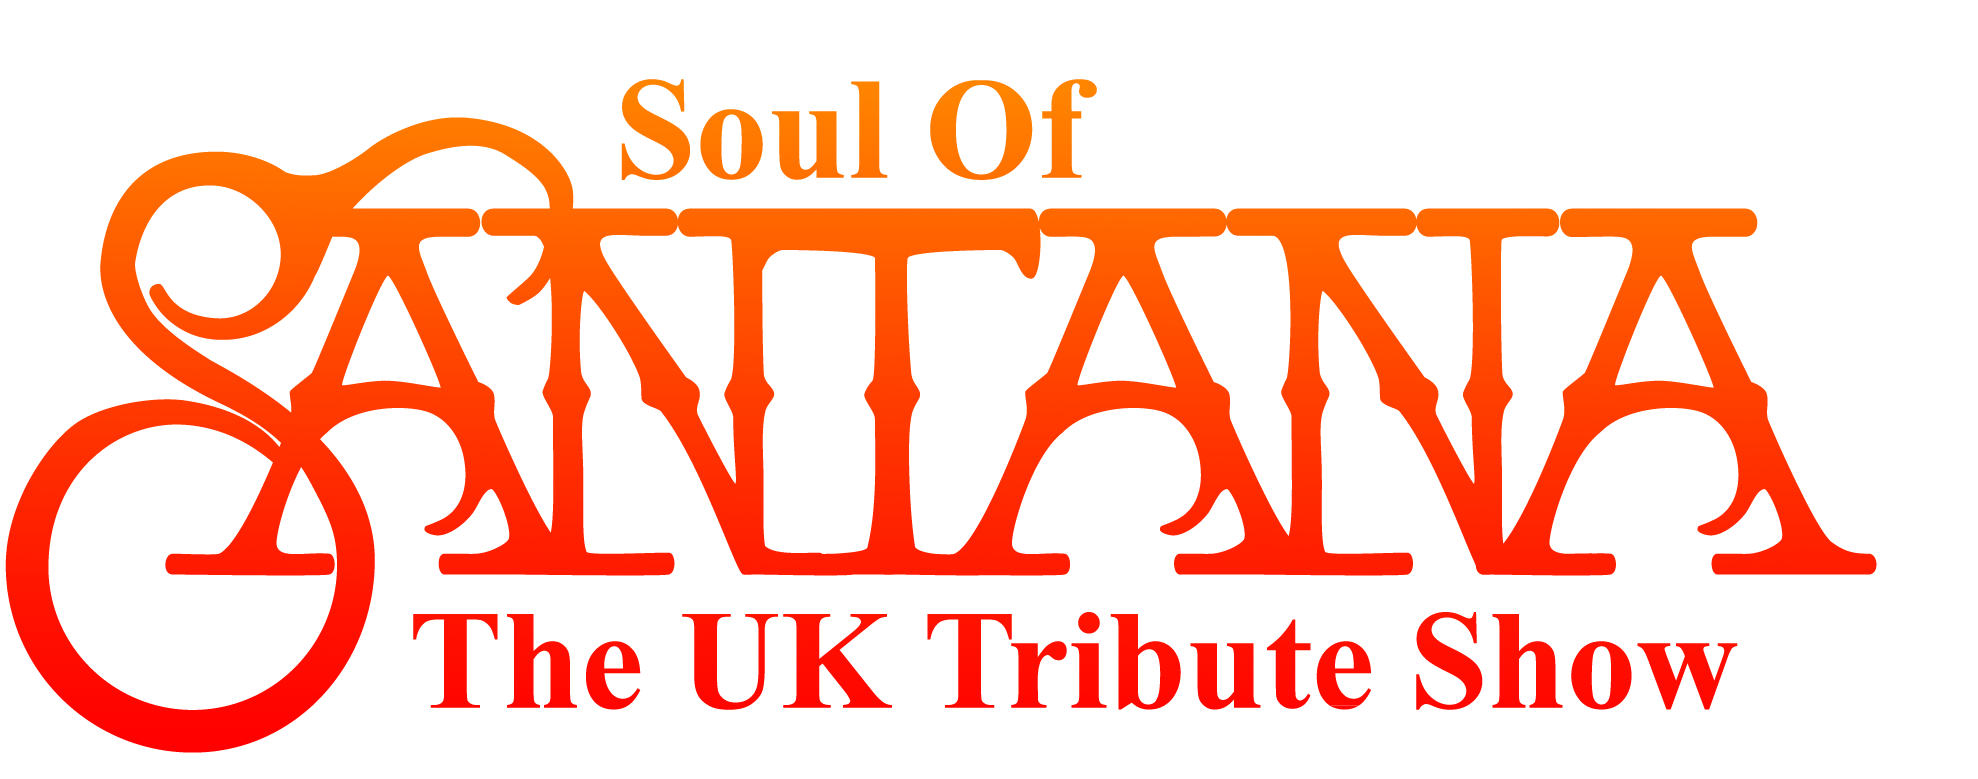 Santana Logo - Ramsgate TRIBUTE ACTS of santana